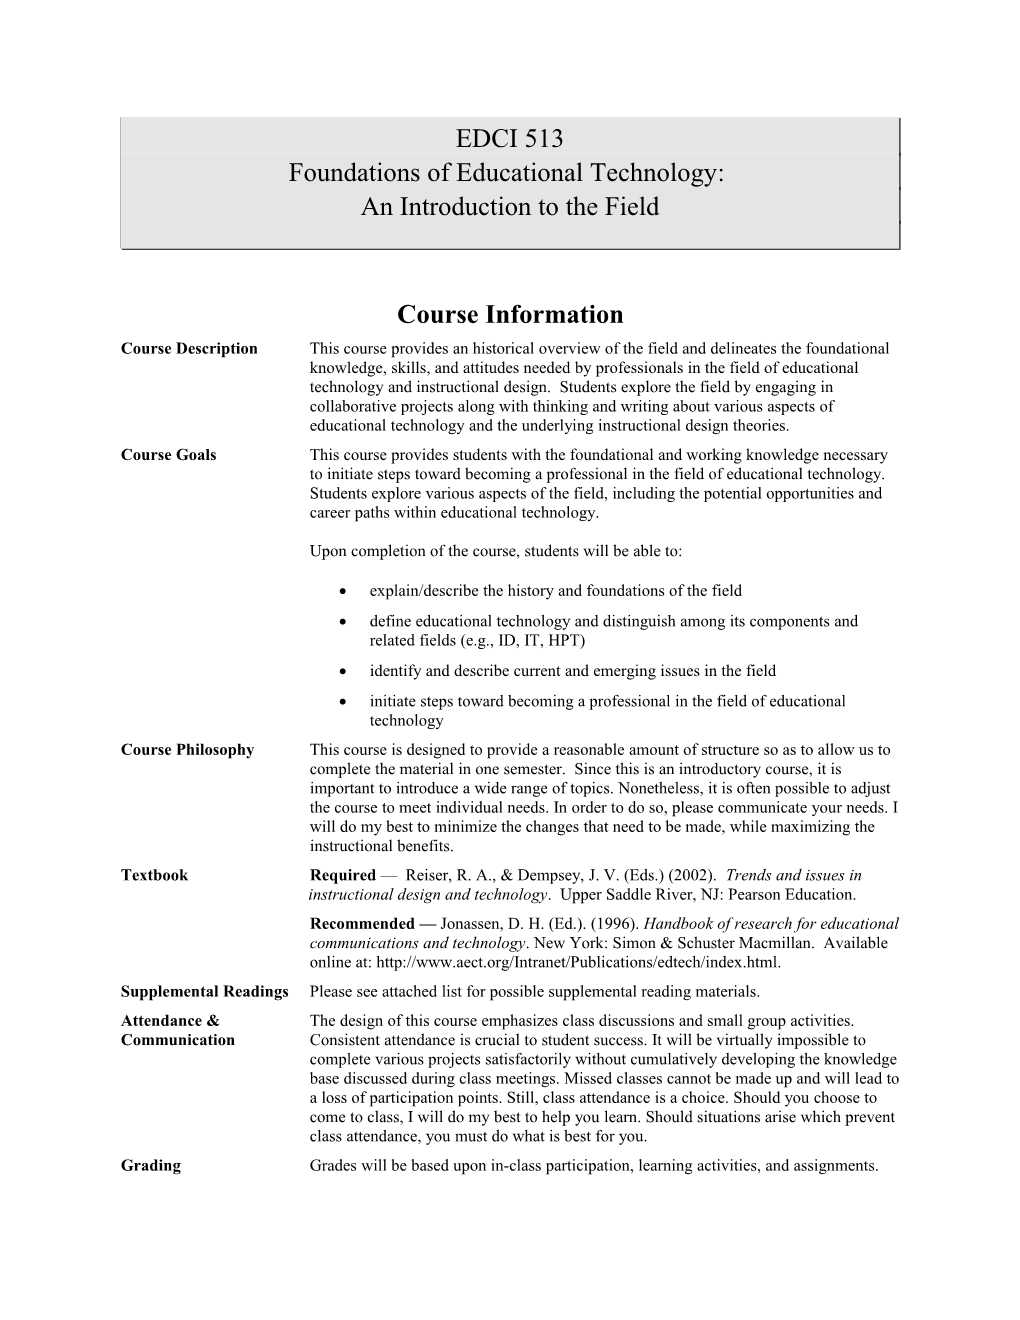 EDCI 591E Introduction to Educational Technology